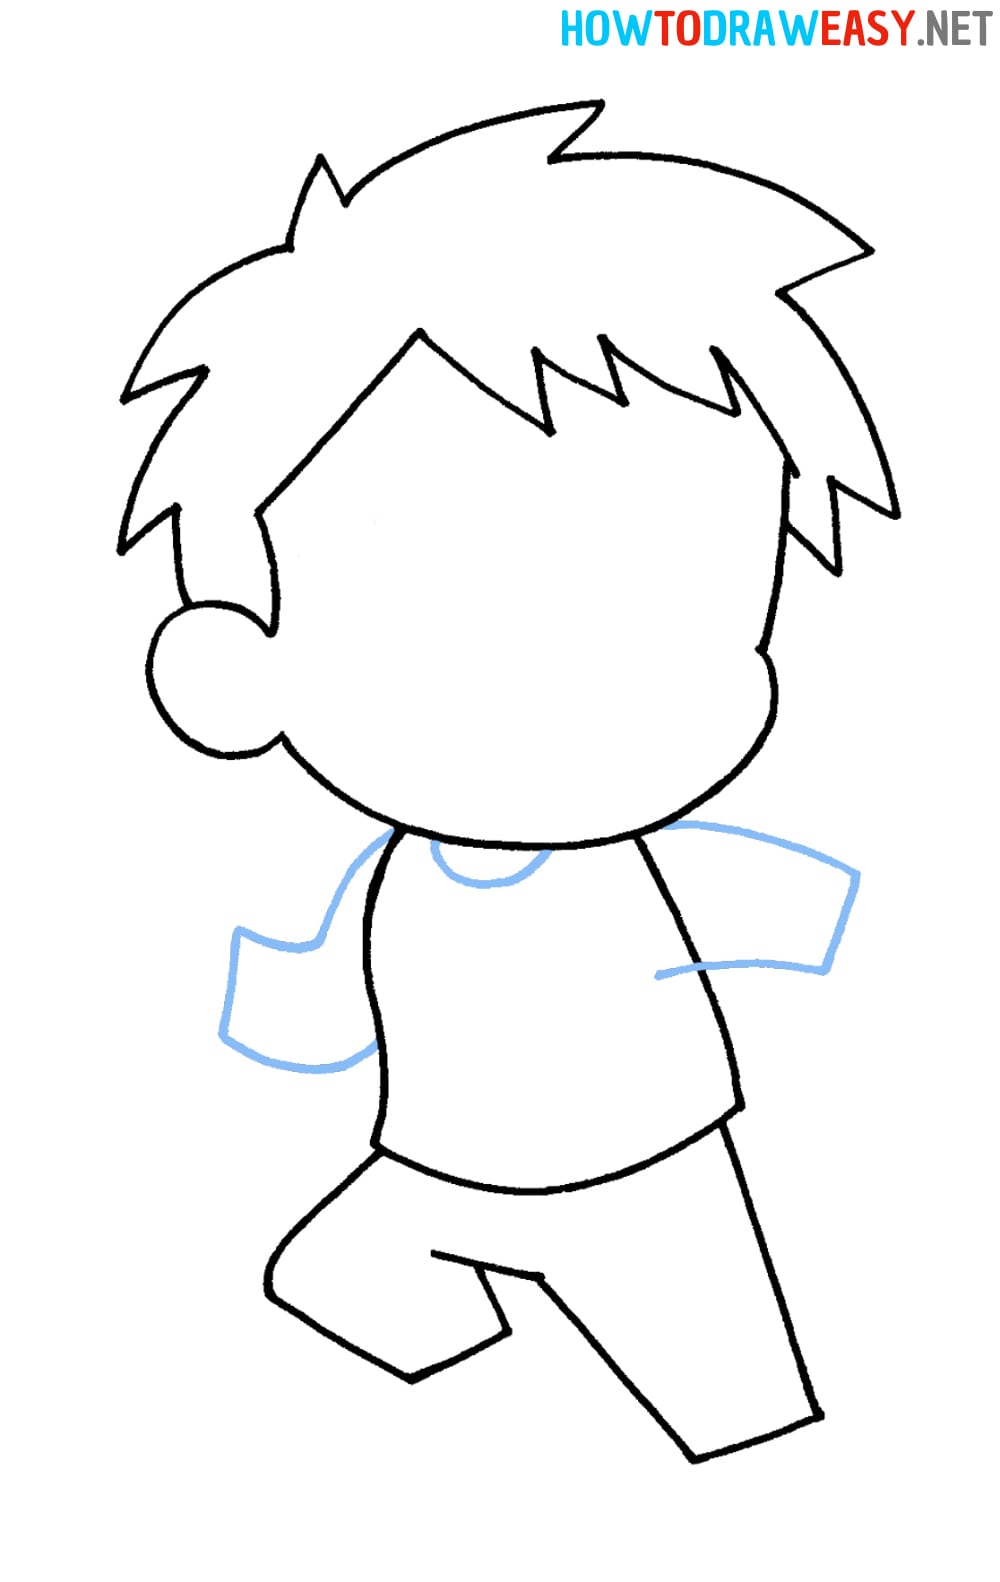 Anime Boy Drawing